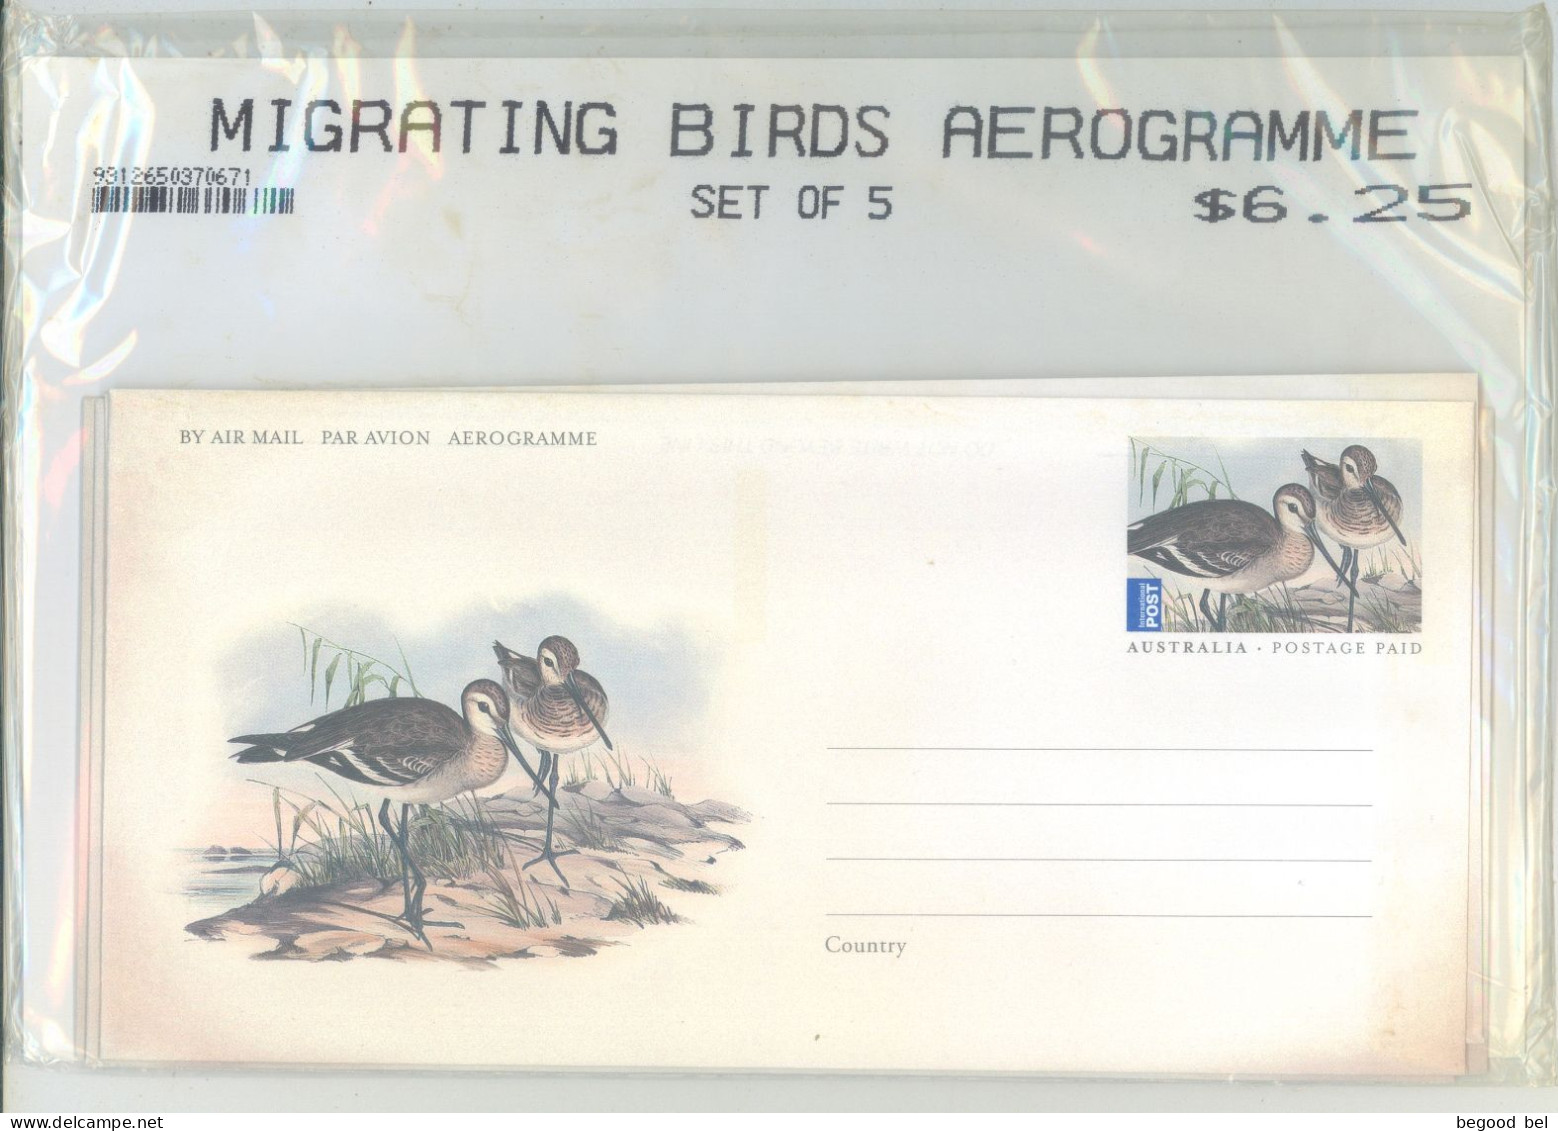 AUSTRALIA - AEROGRAMME COMPLETE SET OF 5 IN THE ORIGINAL ENCLOSED PACKAGING - 2009 - MIGRATING BIRDS -  Lot 25752 - Aerogramas